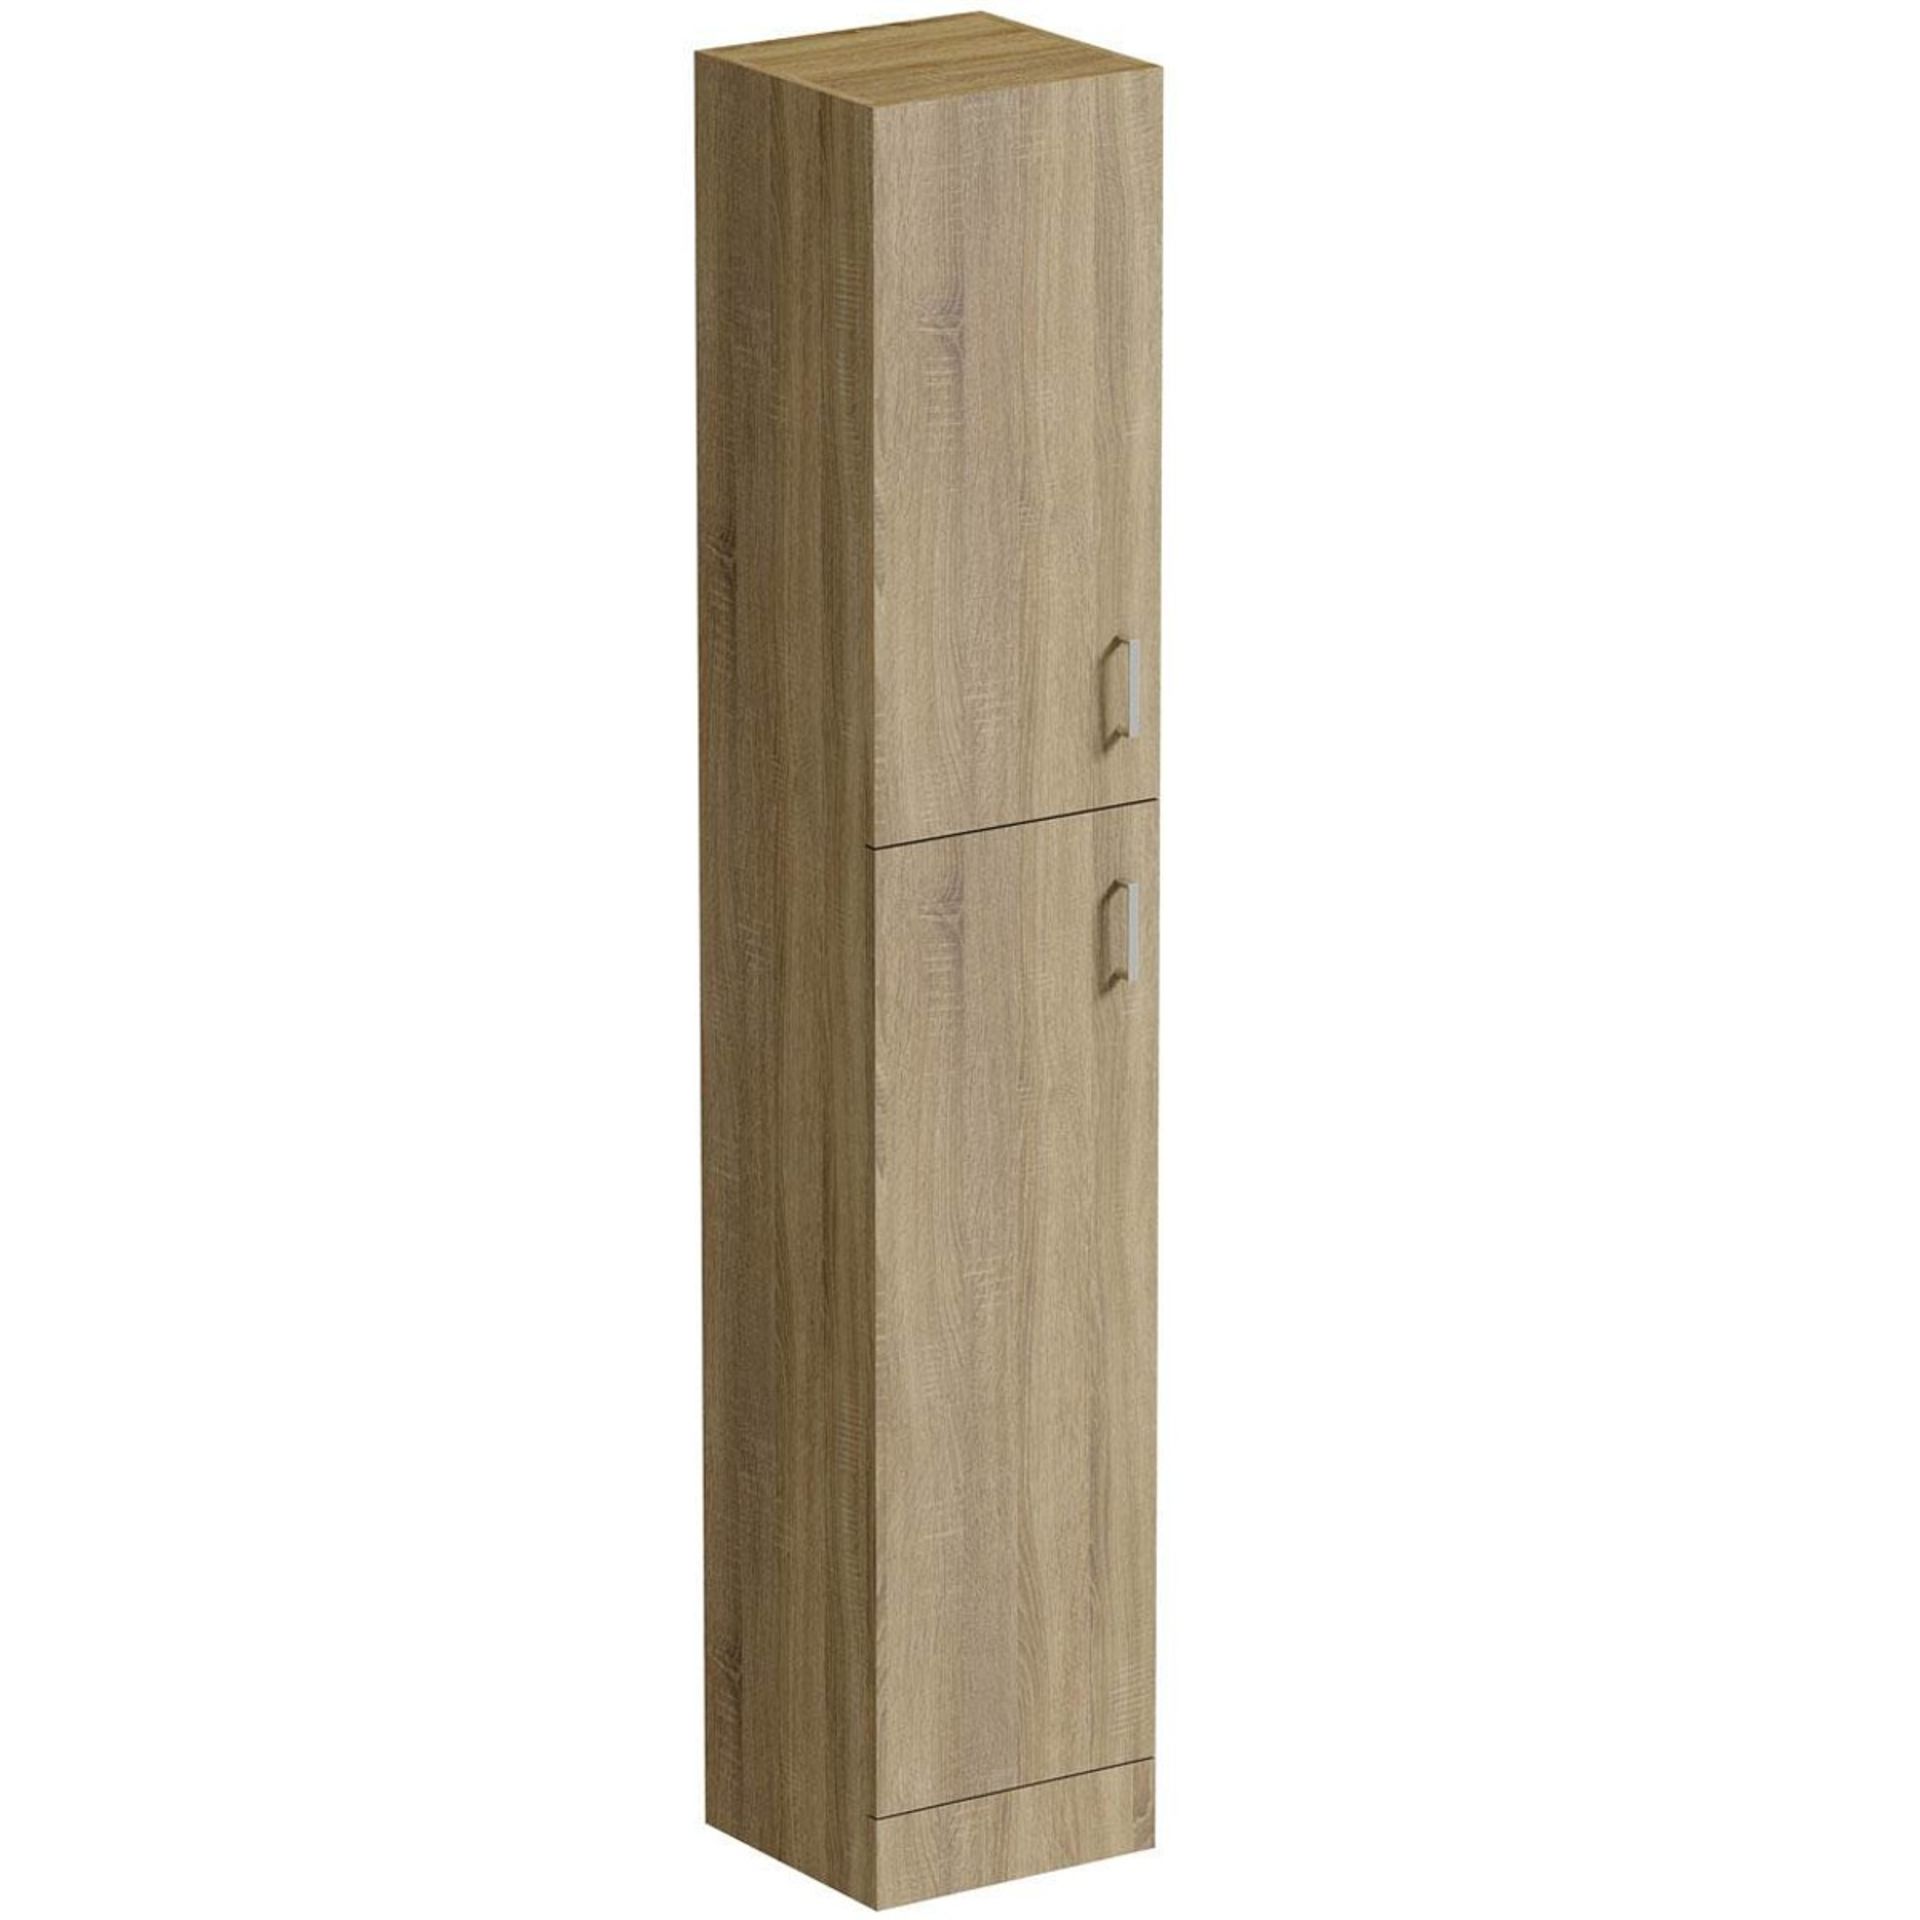 1 x Sienna Oak 300mm Tall Bathroom Storage Unit - Unused Stock - CL190 - Ref BR067 - Location: Bolto - Image 5 of 5